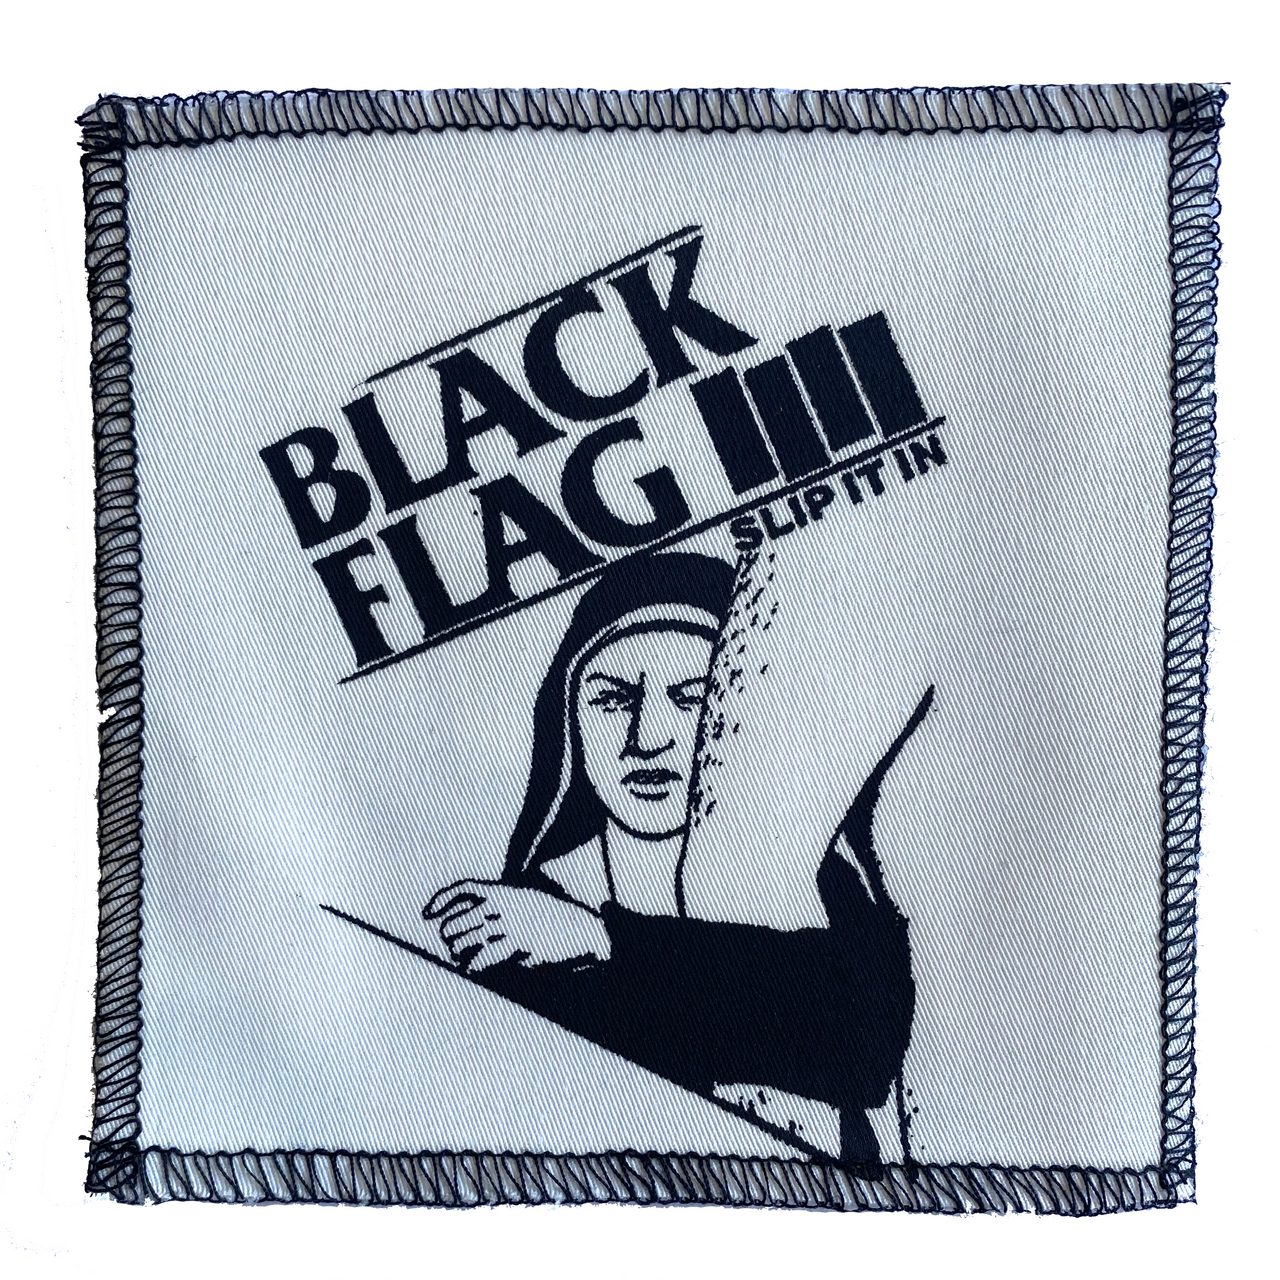 Black Flag Slip It In Cloth Patch